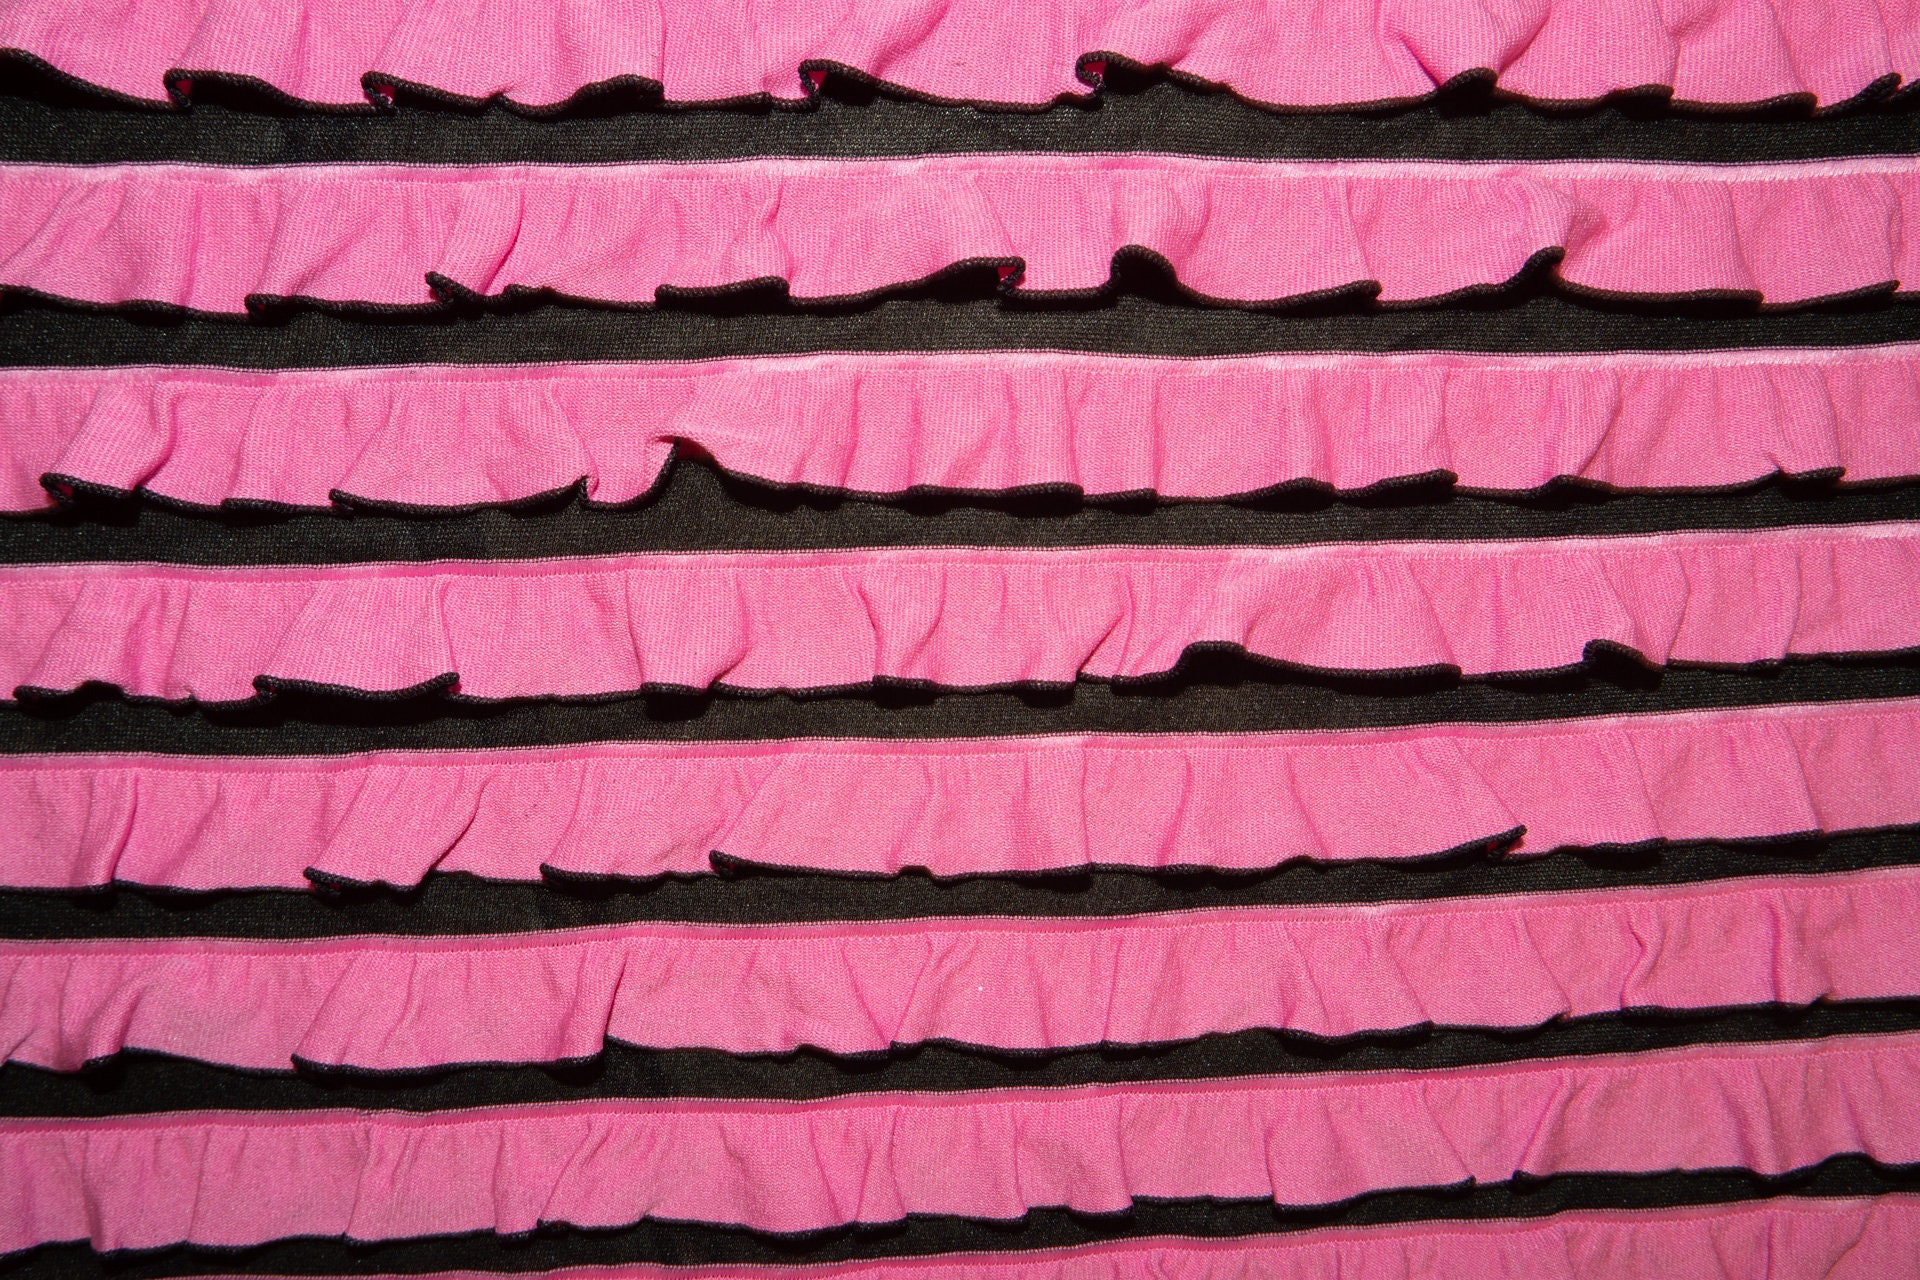 Assorted Ruffle and Mummy Style Fabric Scraps Bundle - Crafts